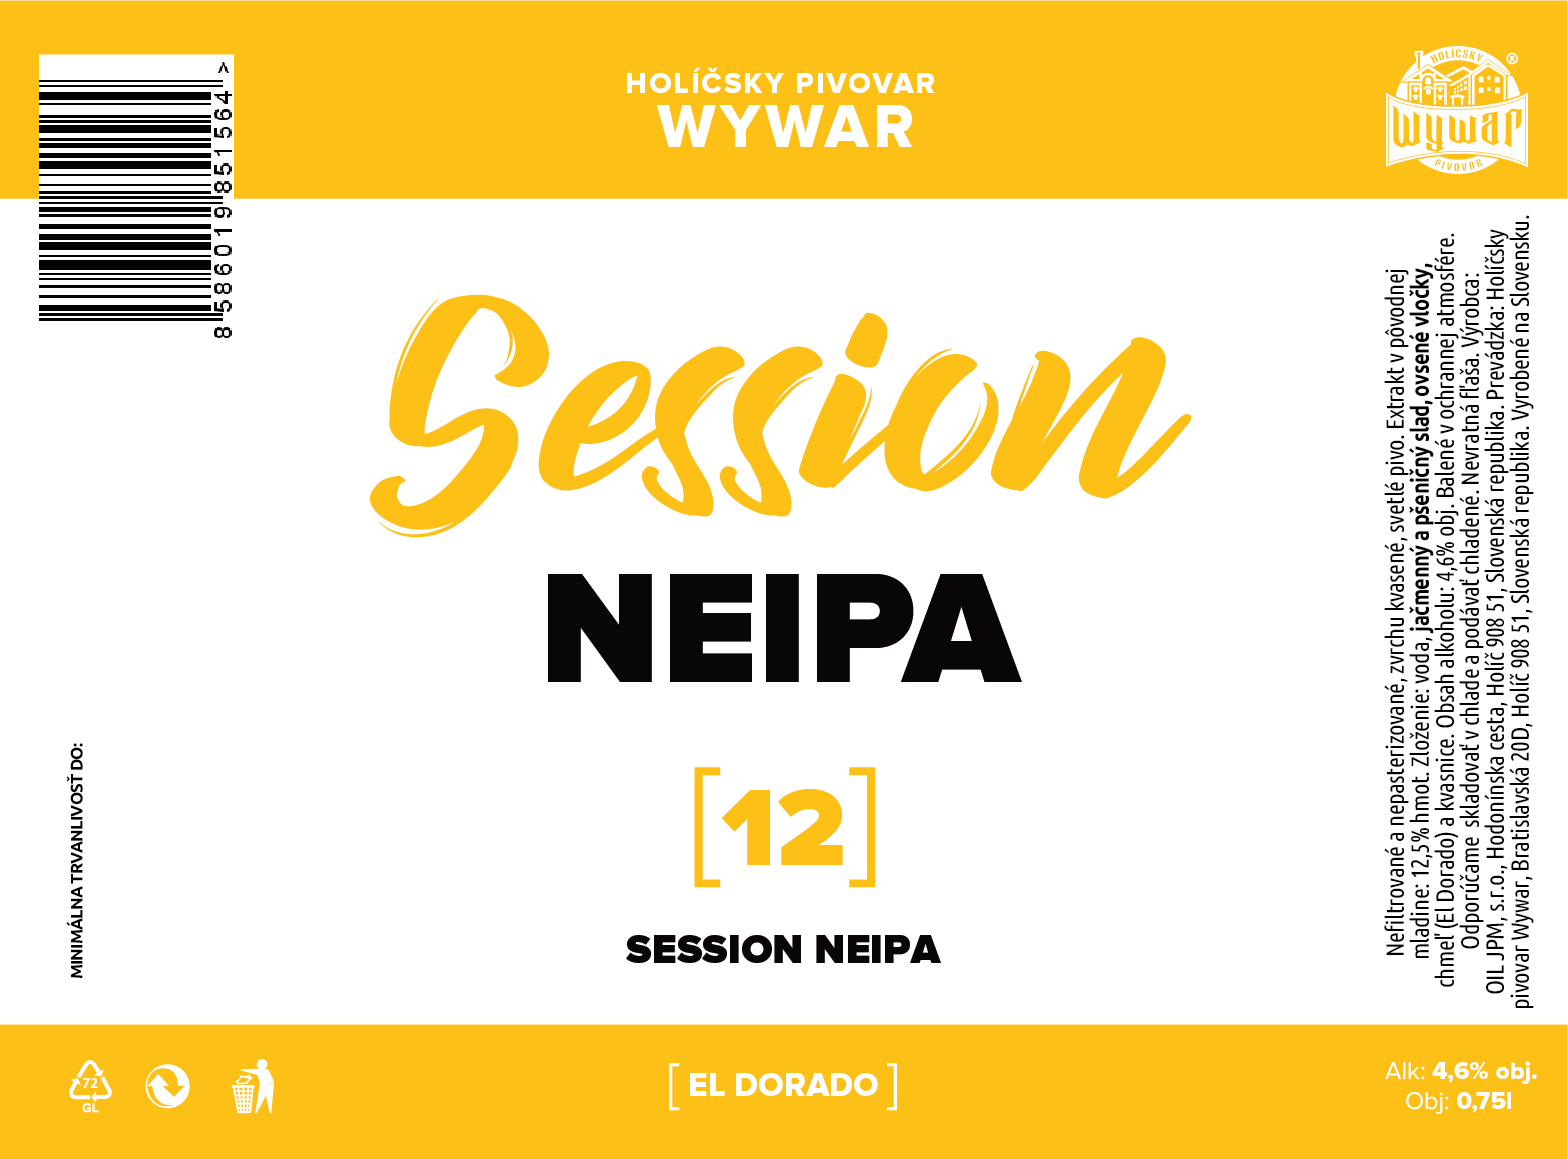 wywar–session-neipa-12-2020